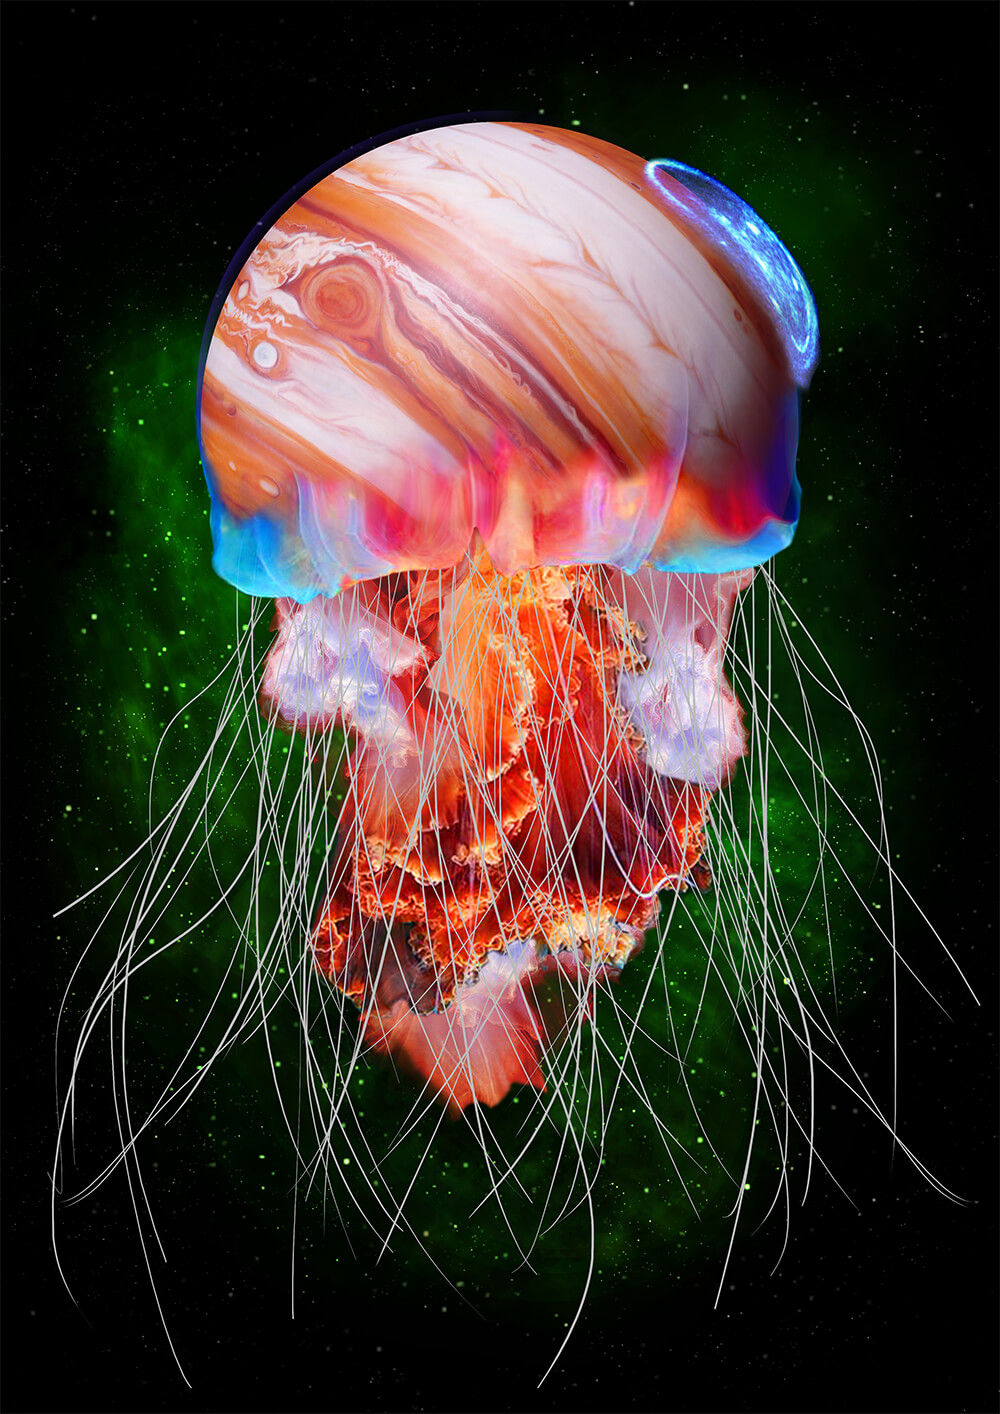 Jellyfish that looks like Jupiter planet